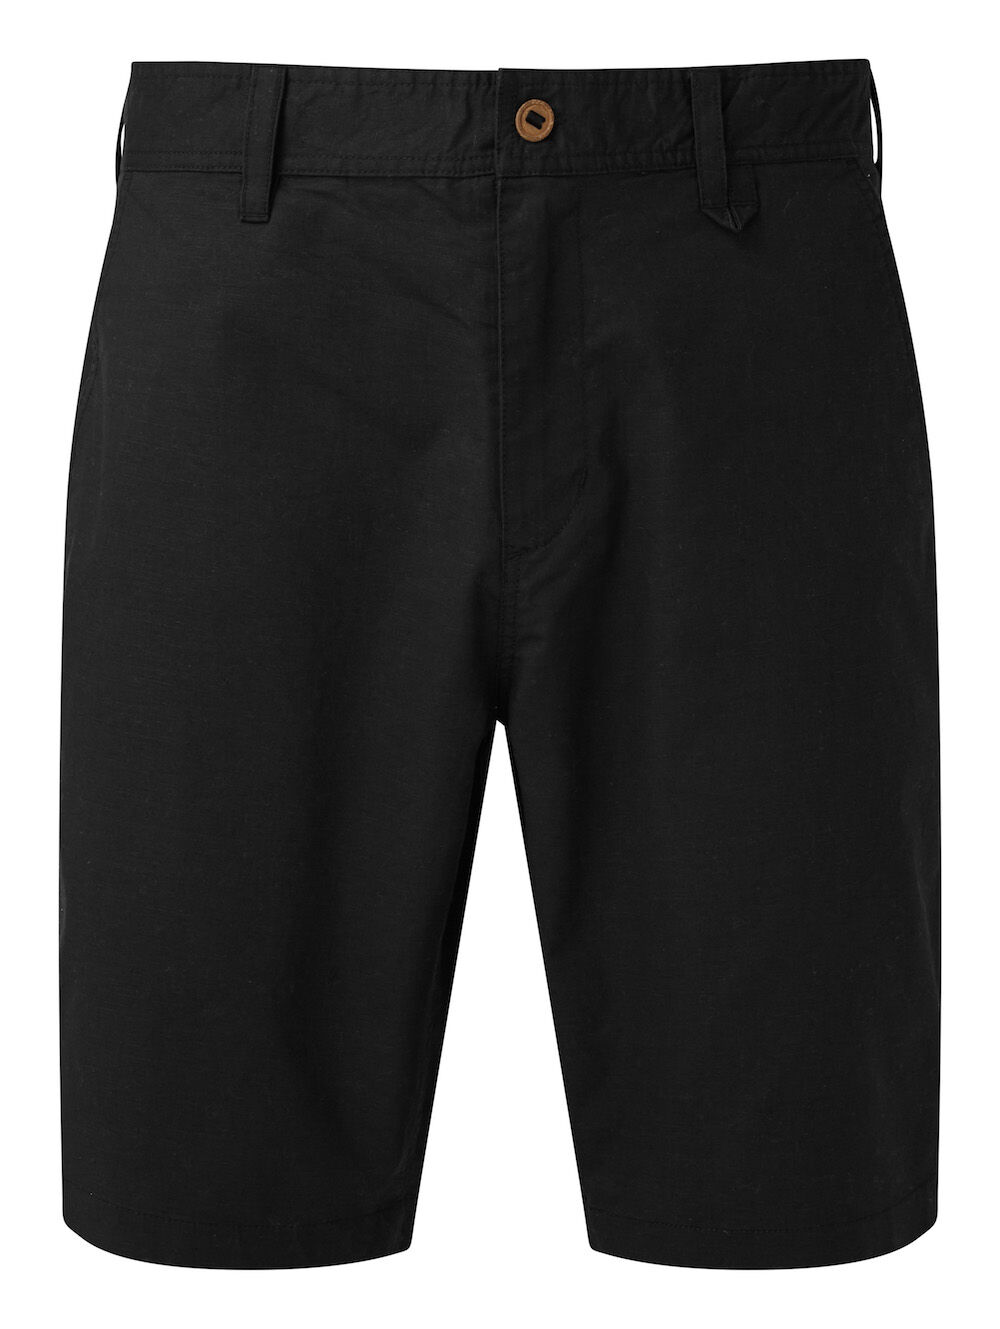 Tentree Preston Hemp Short - Hiking shorts - Men's